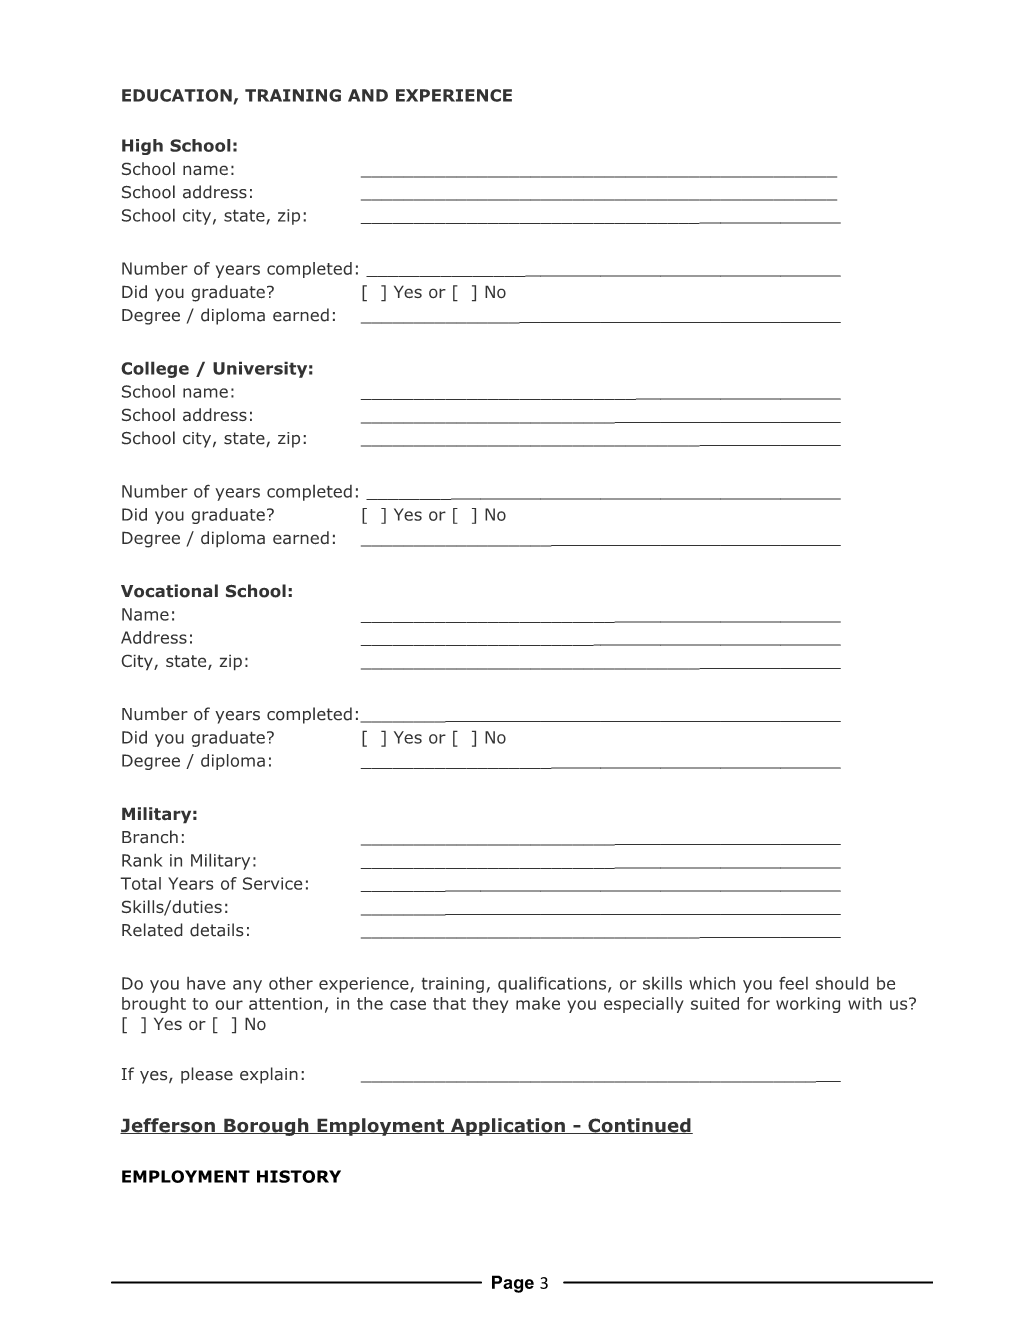 Jefferson Borough Employment Application